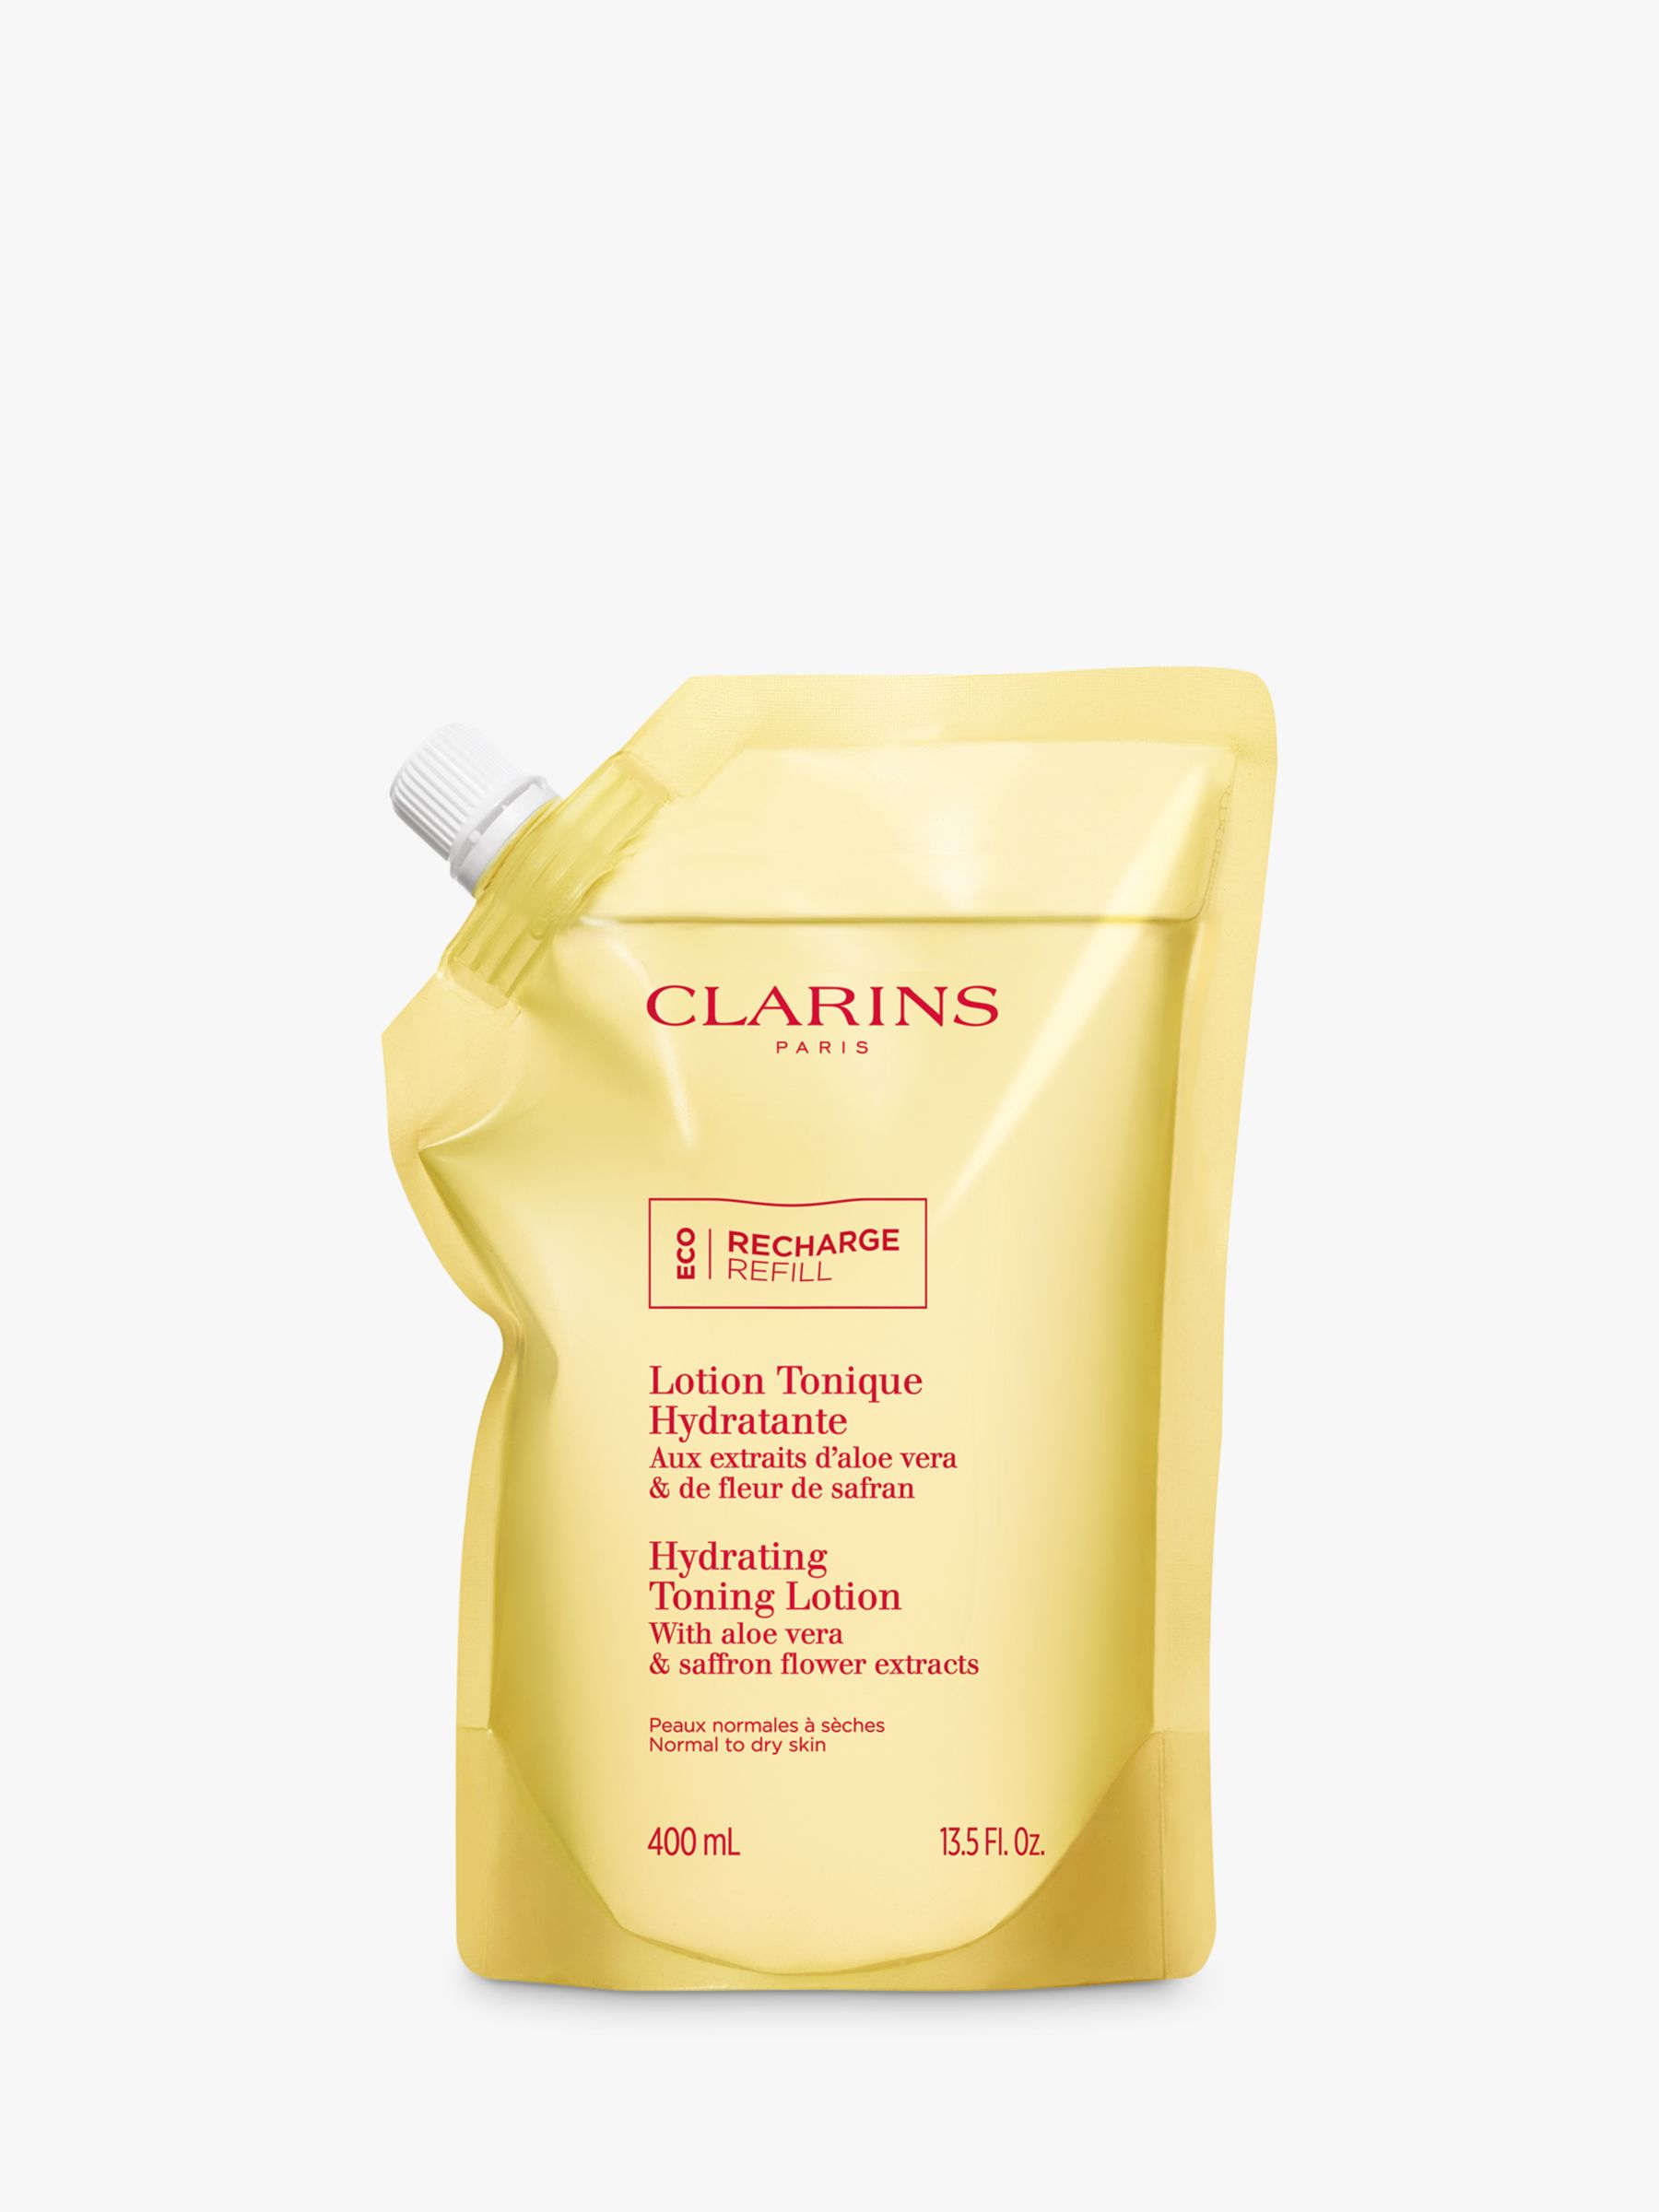 Clarins Hydrating Toning Lotion Refill, 400ml 1